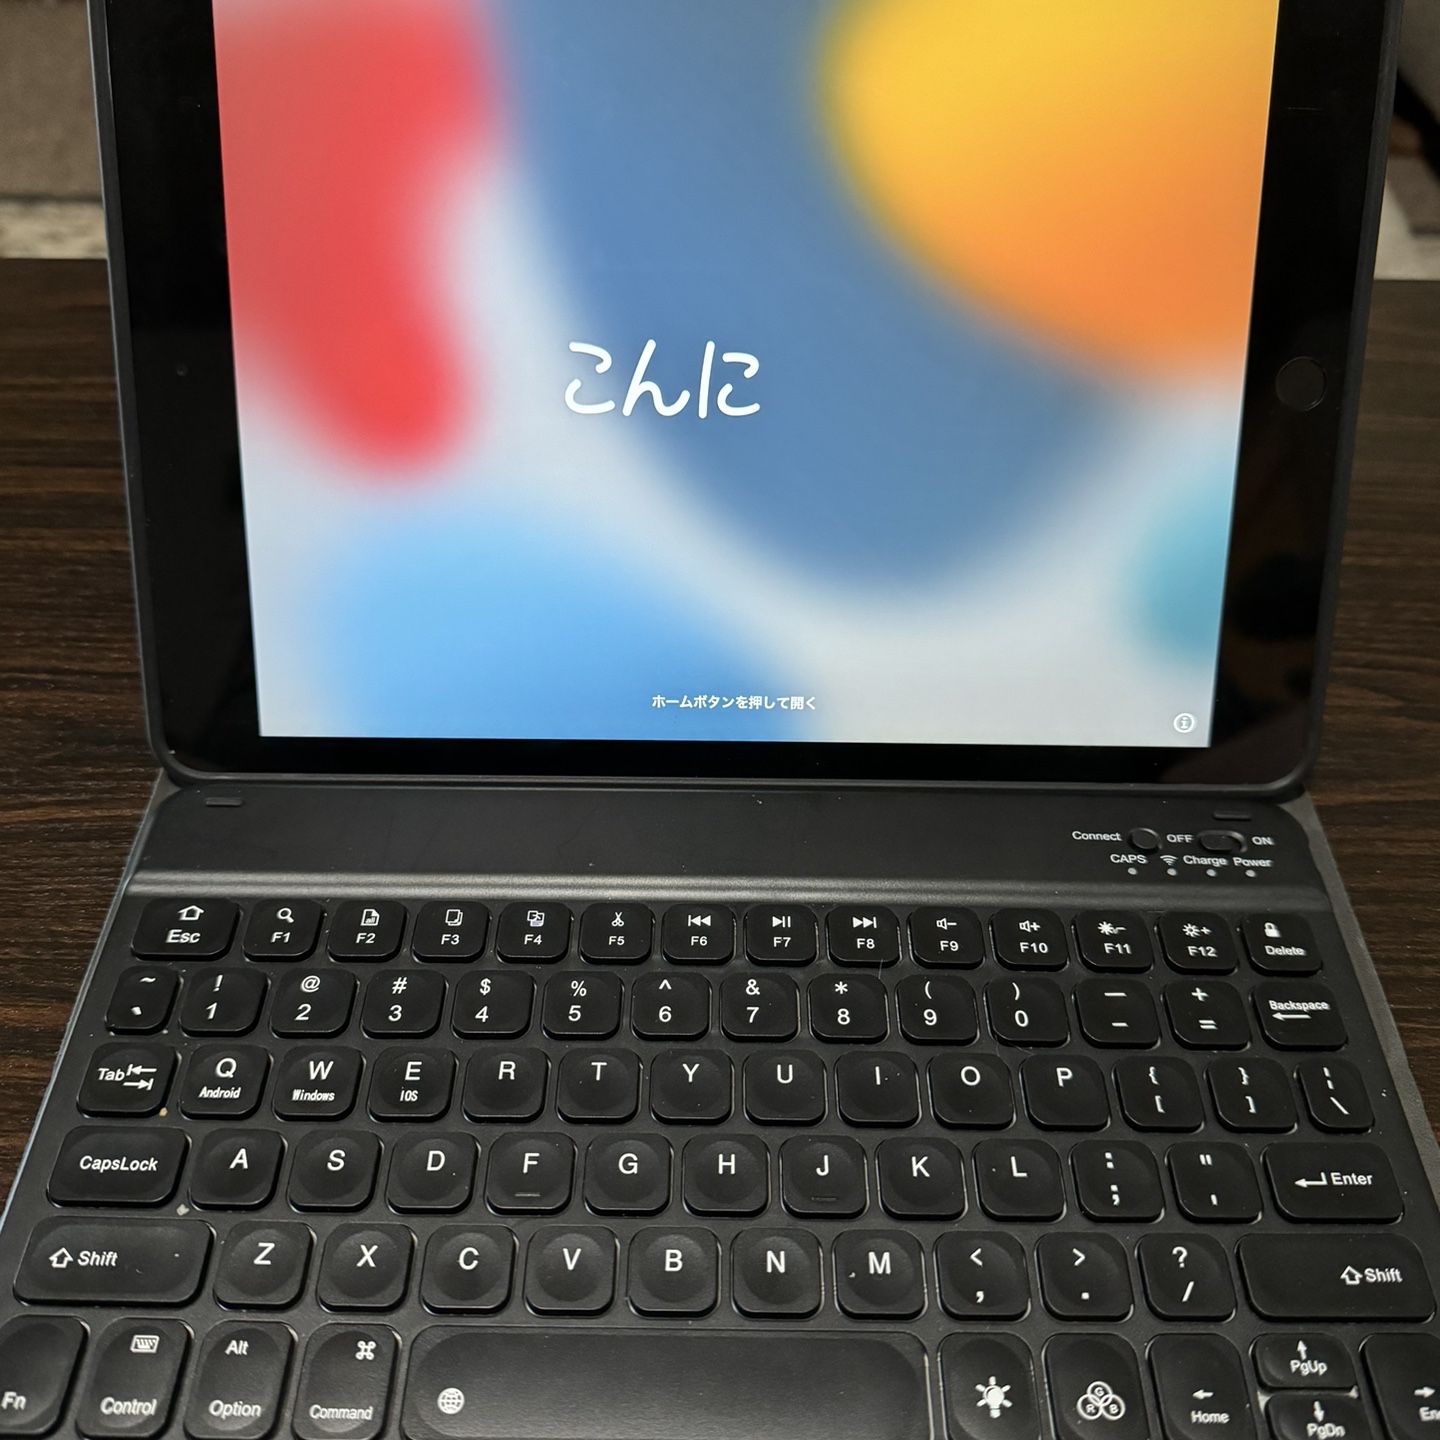 iPad 7th Generation 